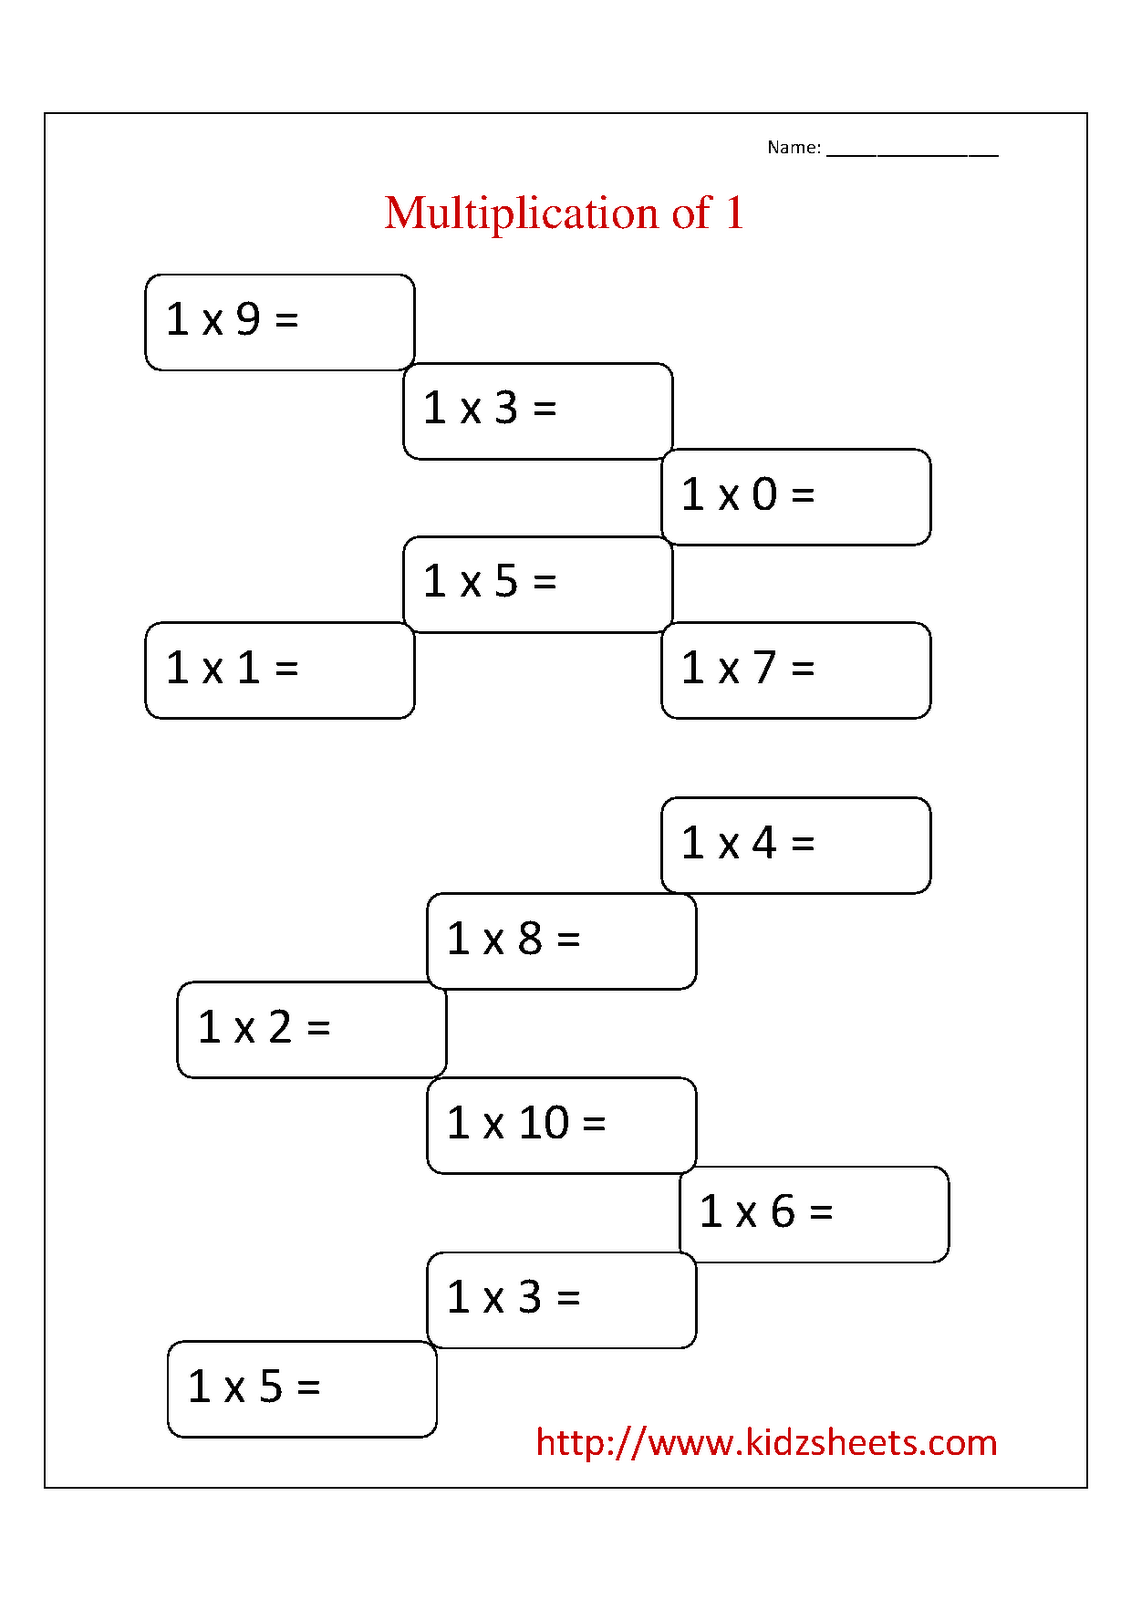 Kidz Worksheets: Second Grade Multiplication Table 1